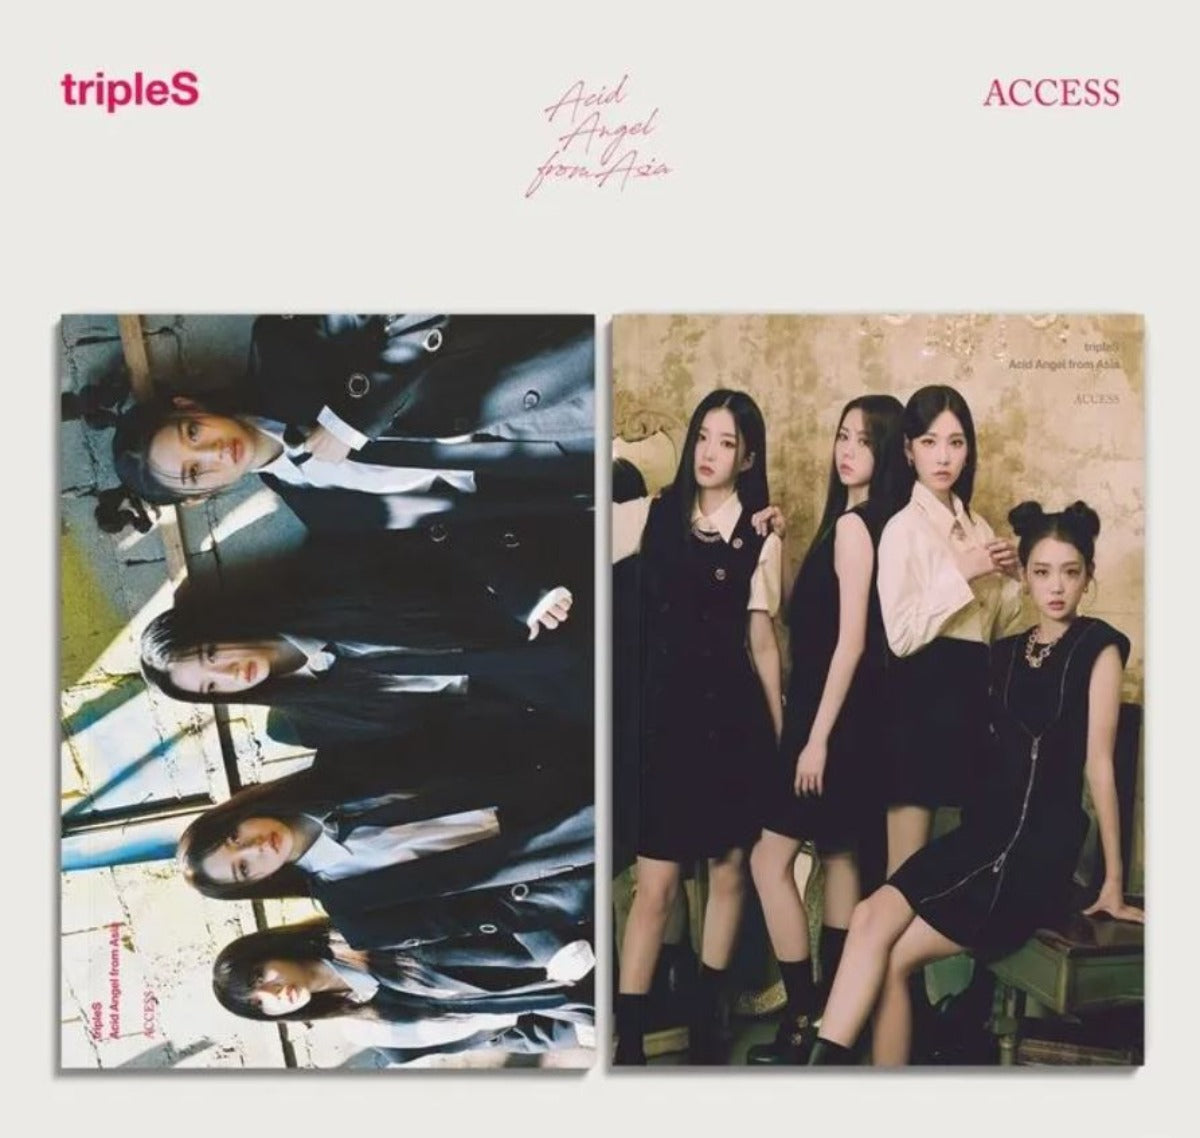 tripleS : Acid Angel from Asia Mini Album Vol. 1 - ACCESS